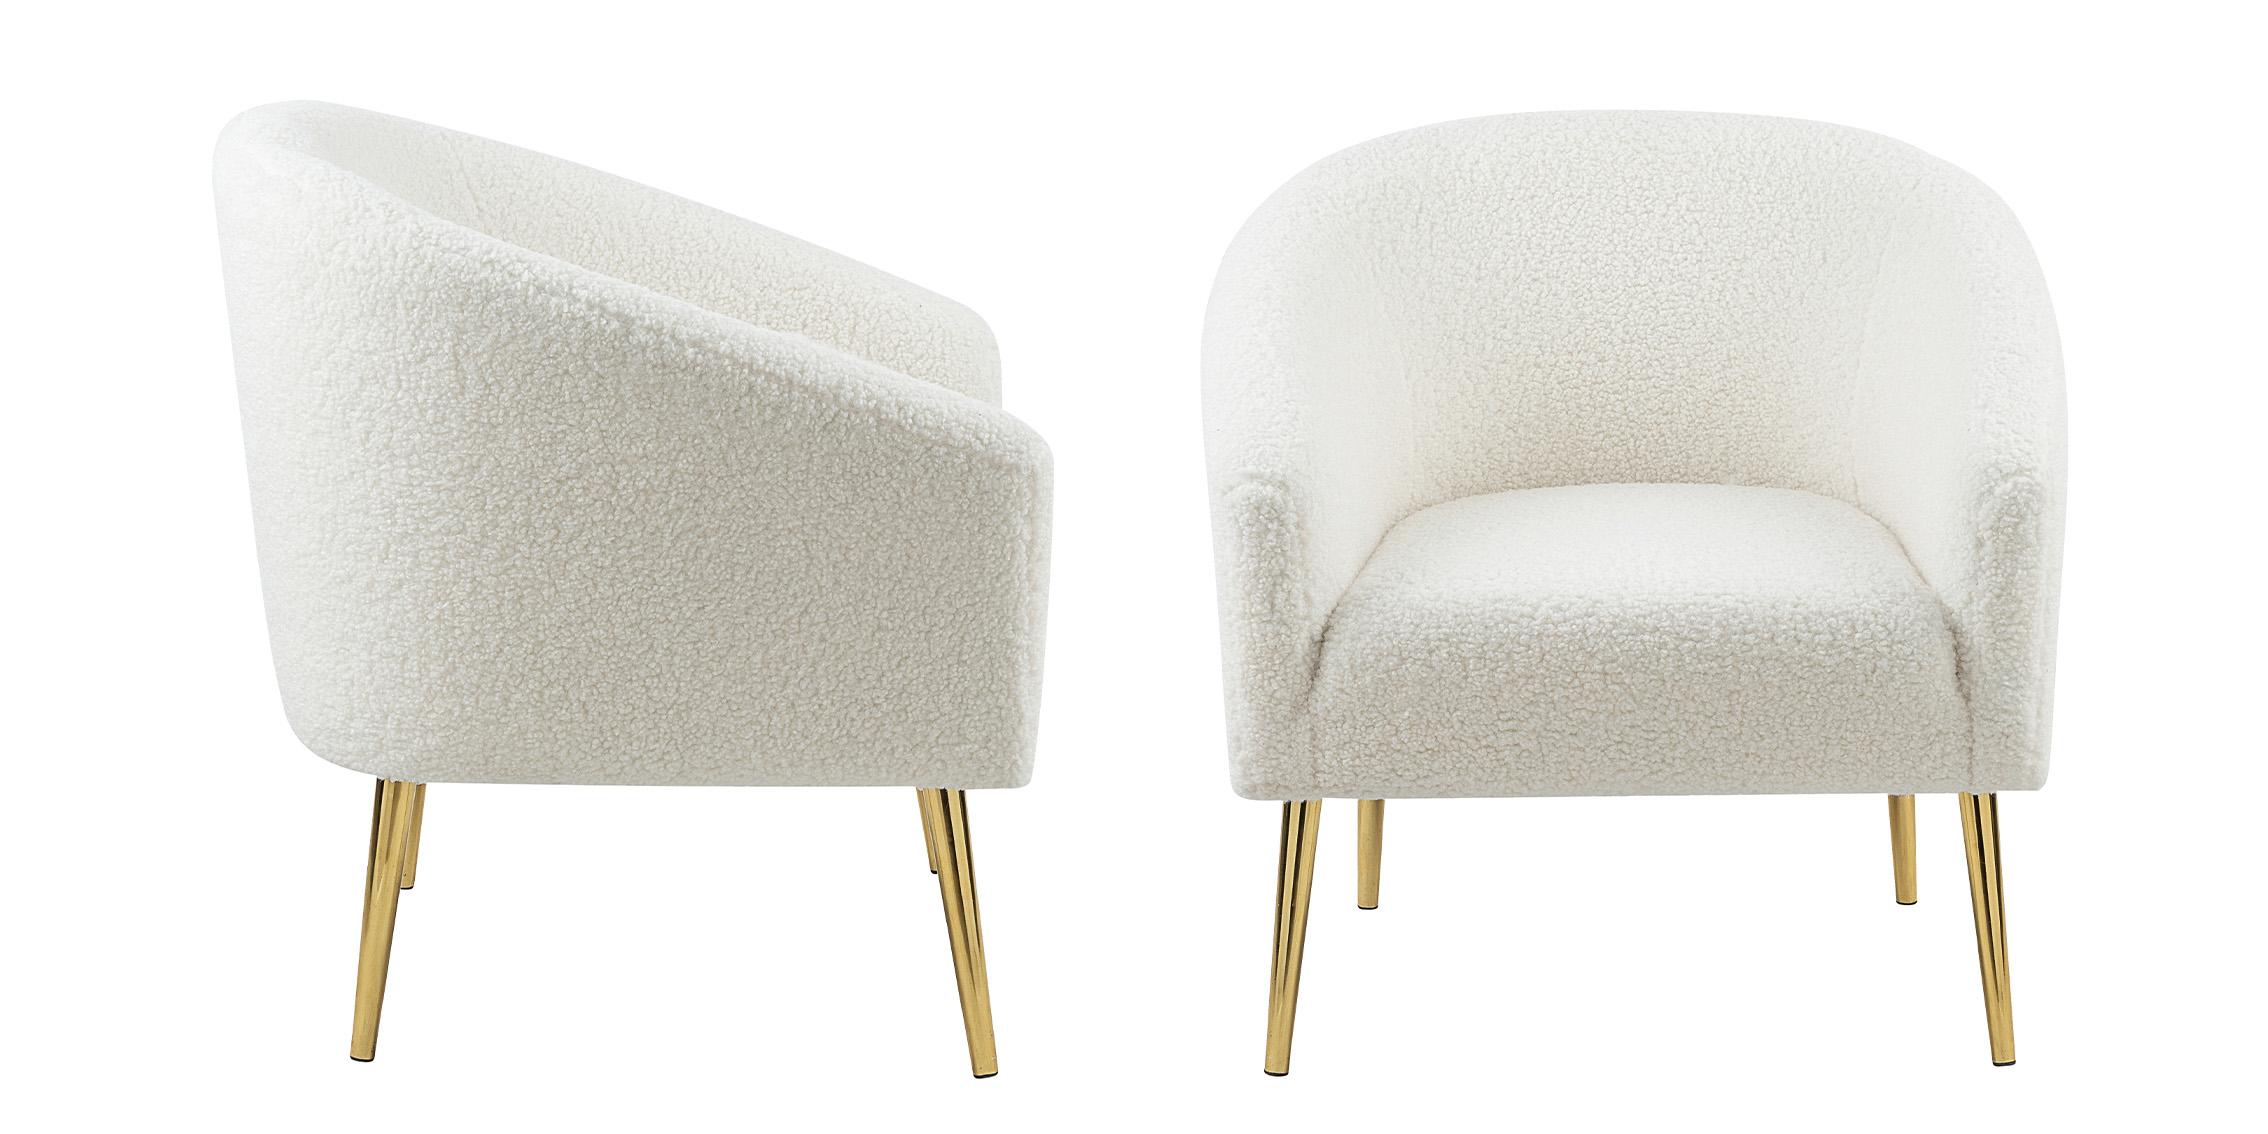 

    
Glam White Faux Sheepskin Fur Chair Set 2Pcs BARLOW 505 Meridian Contemporary
